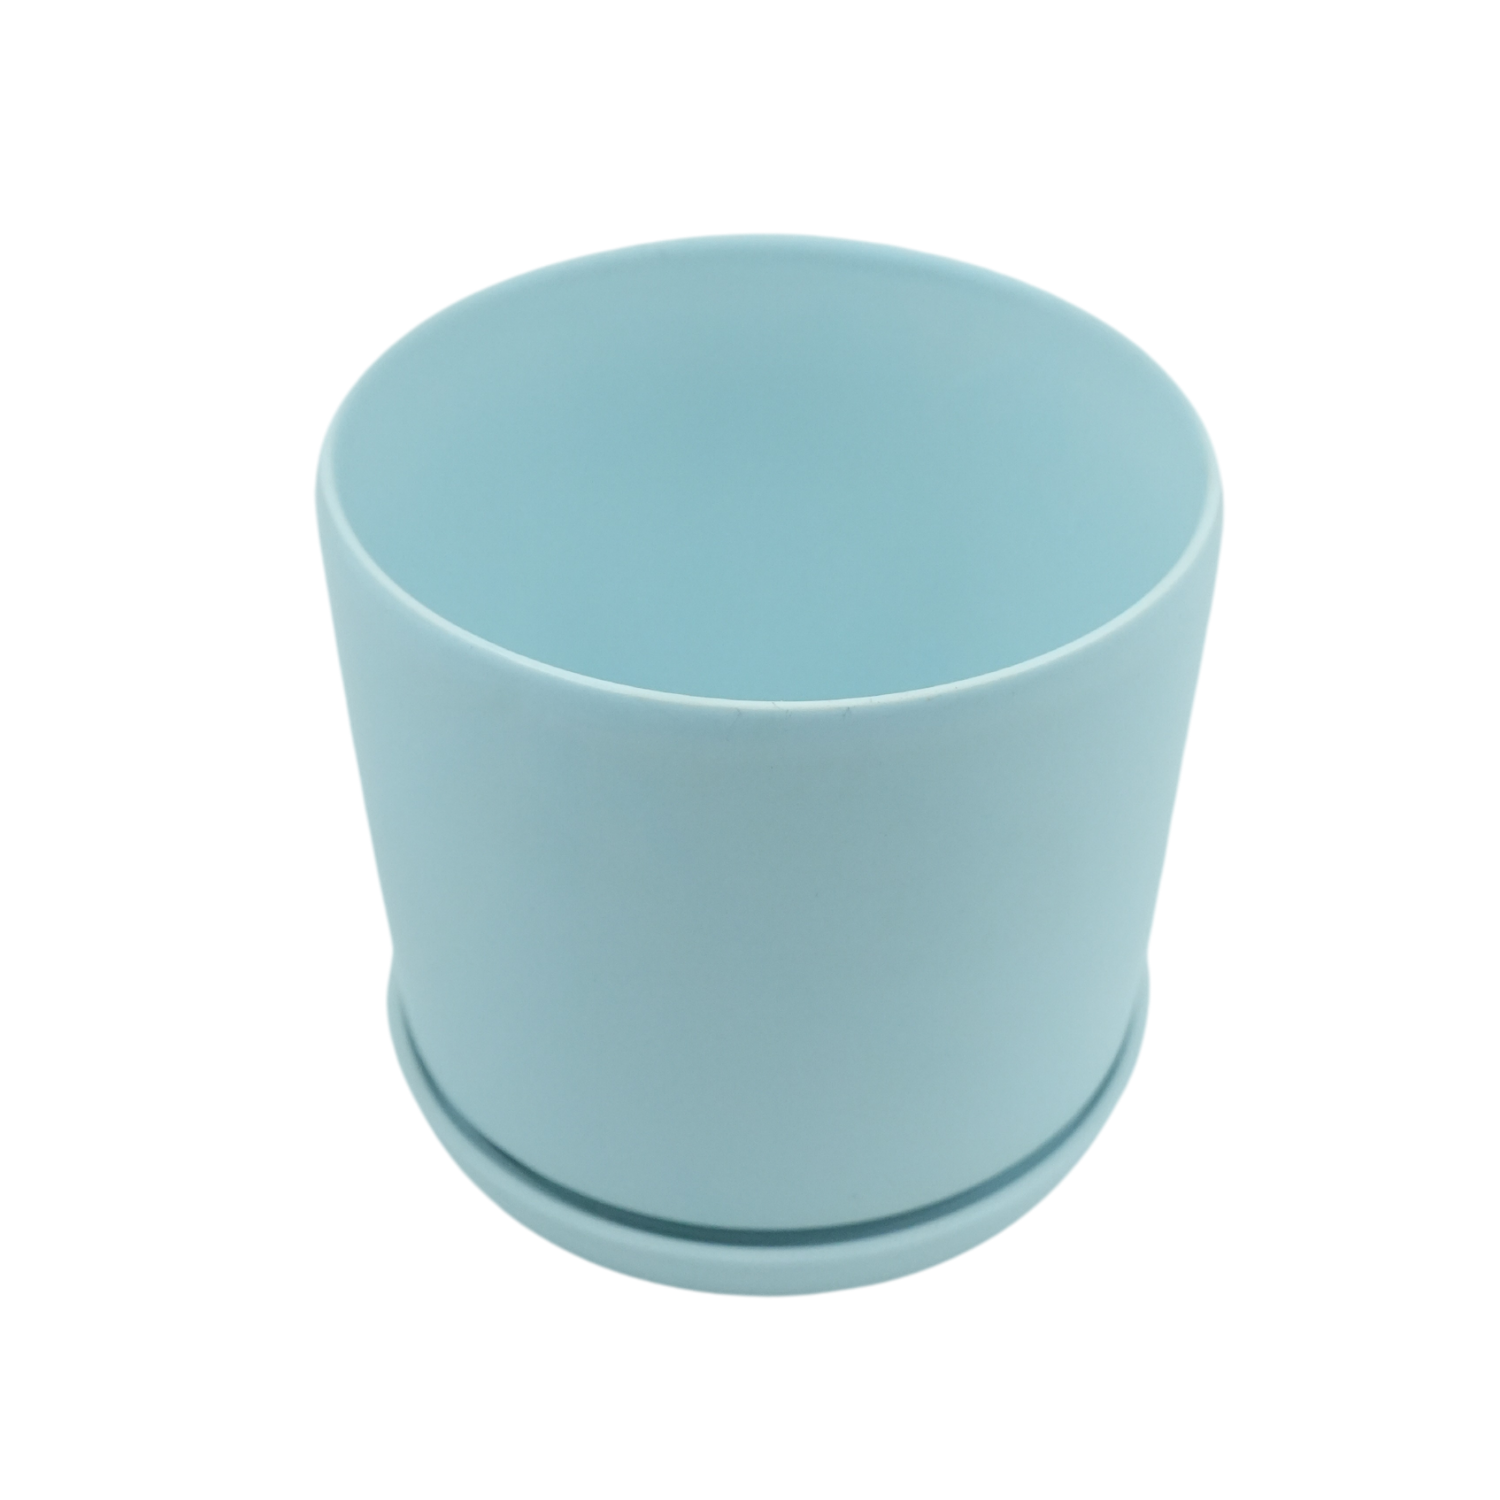 Designer Ceramic Pot (Blue, Matt Finish,Small) for Home & Indoor Plant Decor